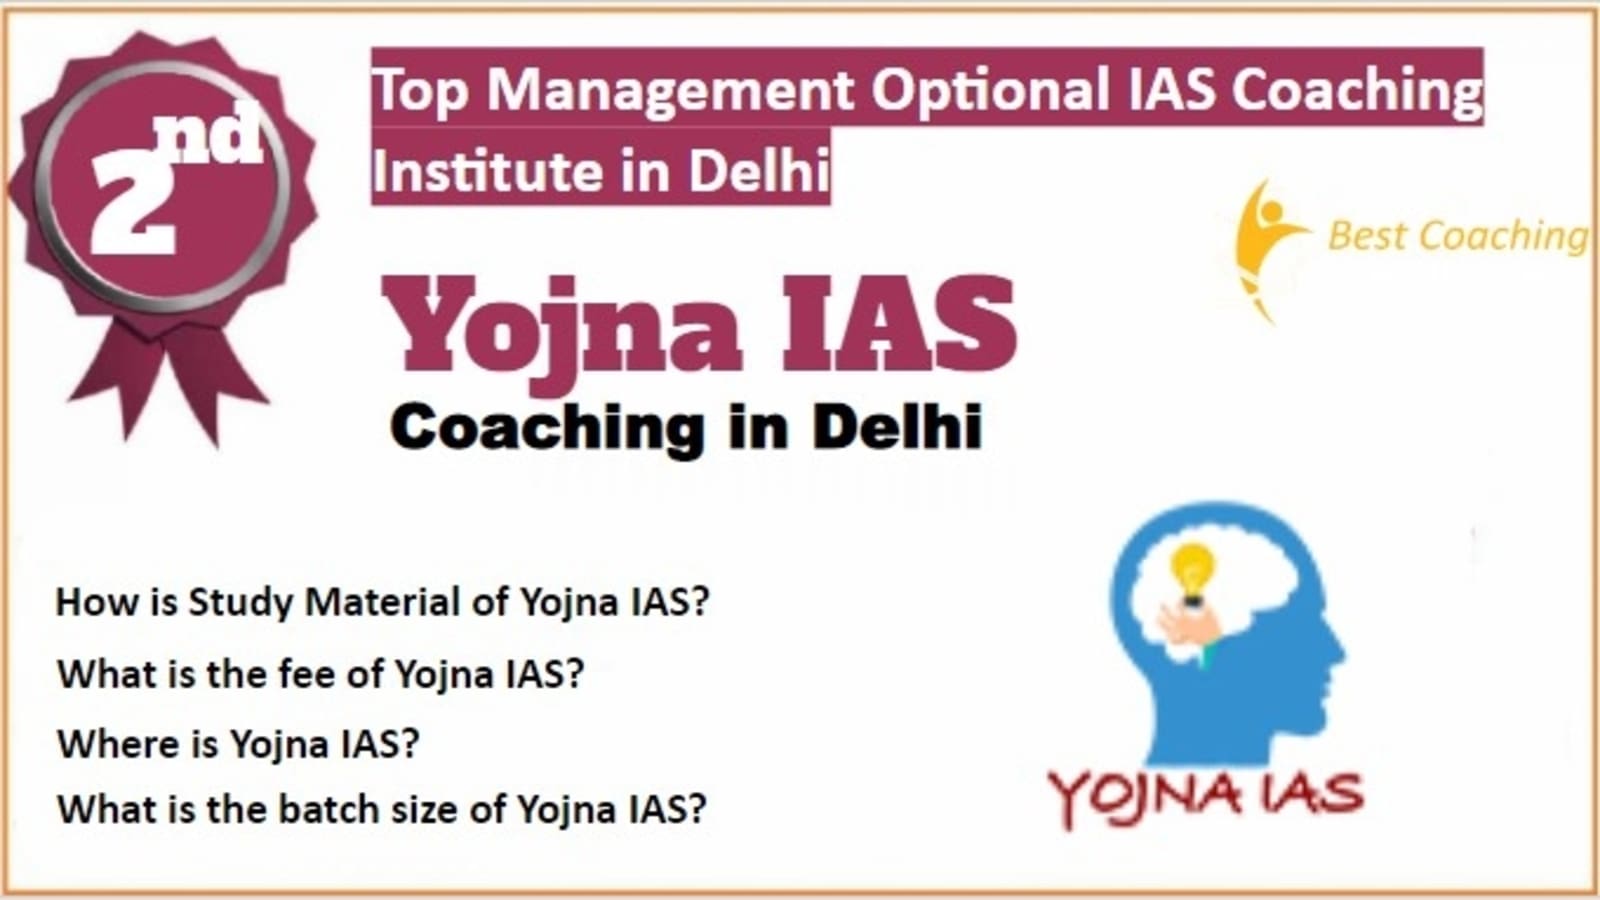 Rank 2 Best Management Optional IAS Coaching in Delhi